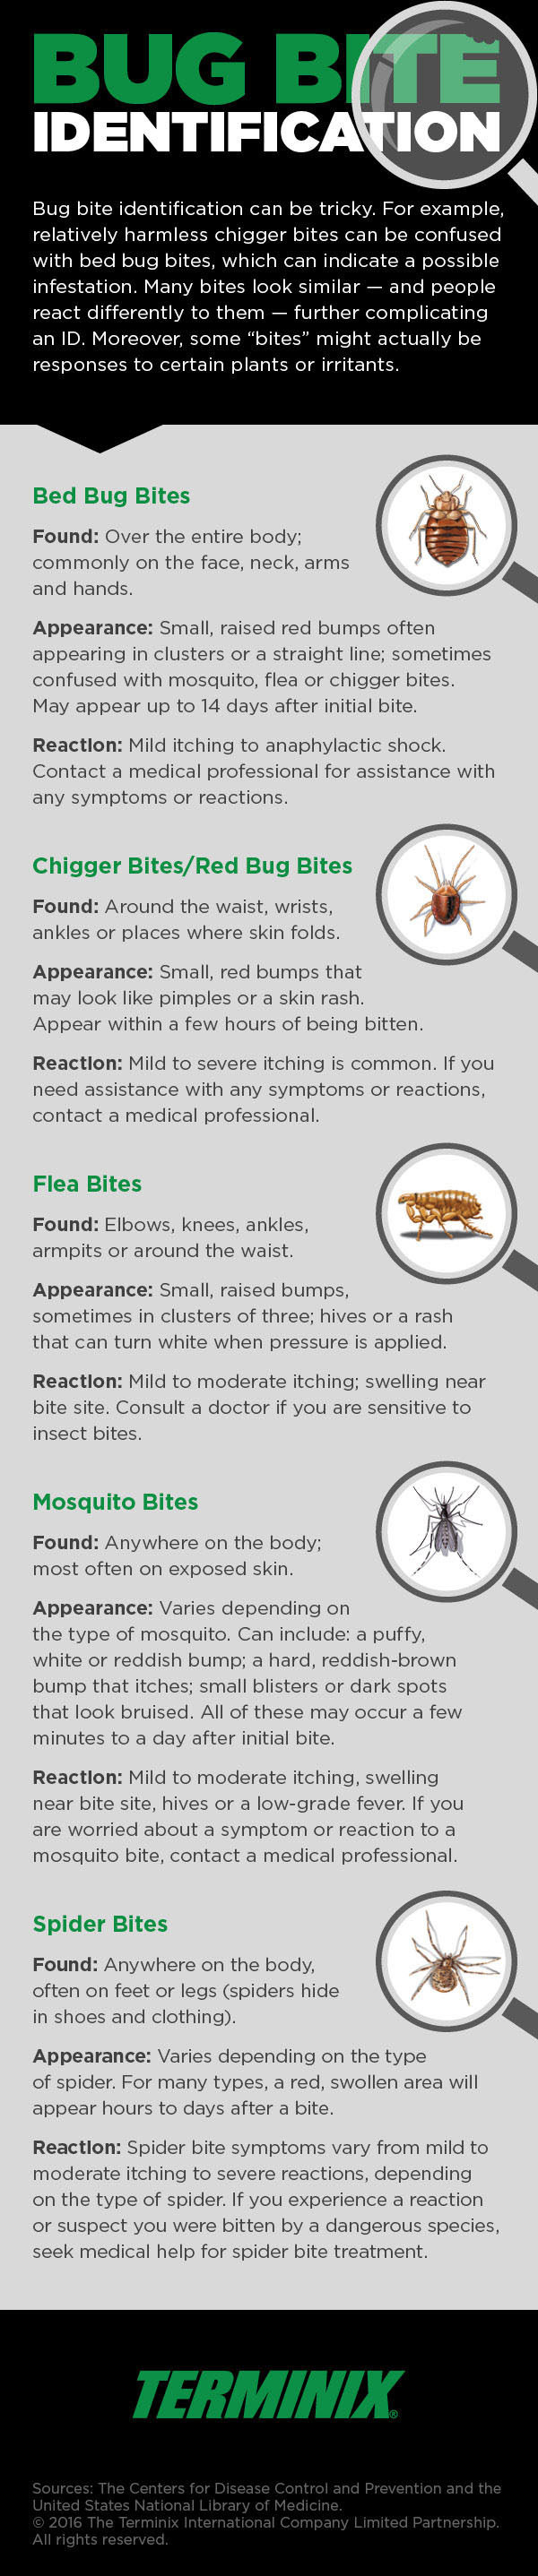 bug bite ID infographic